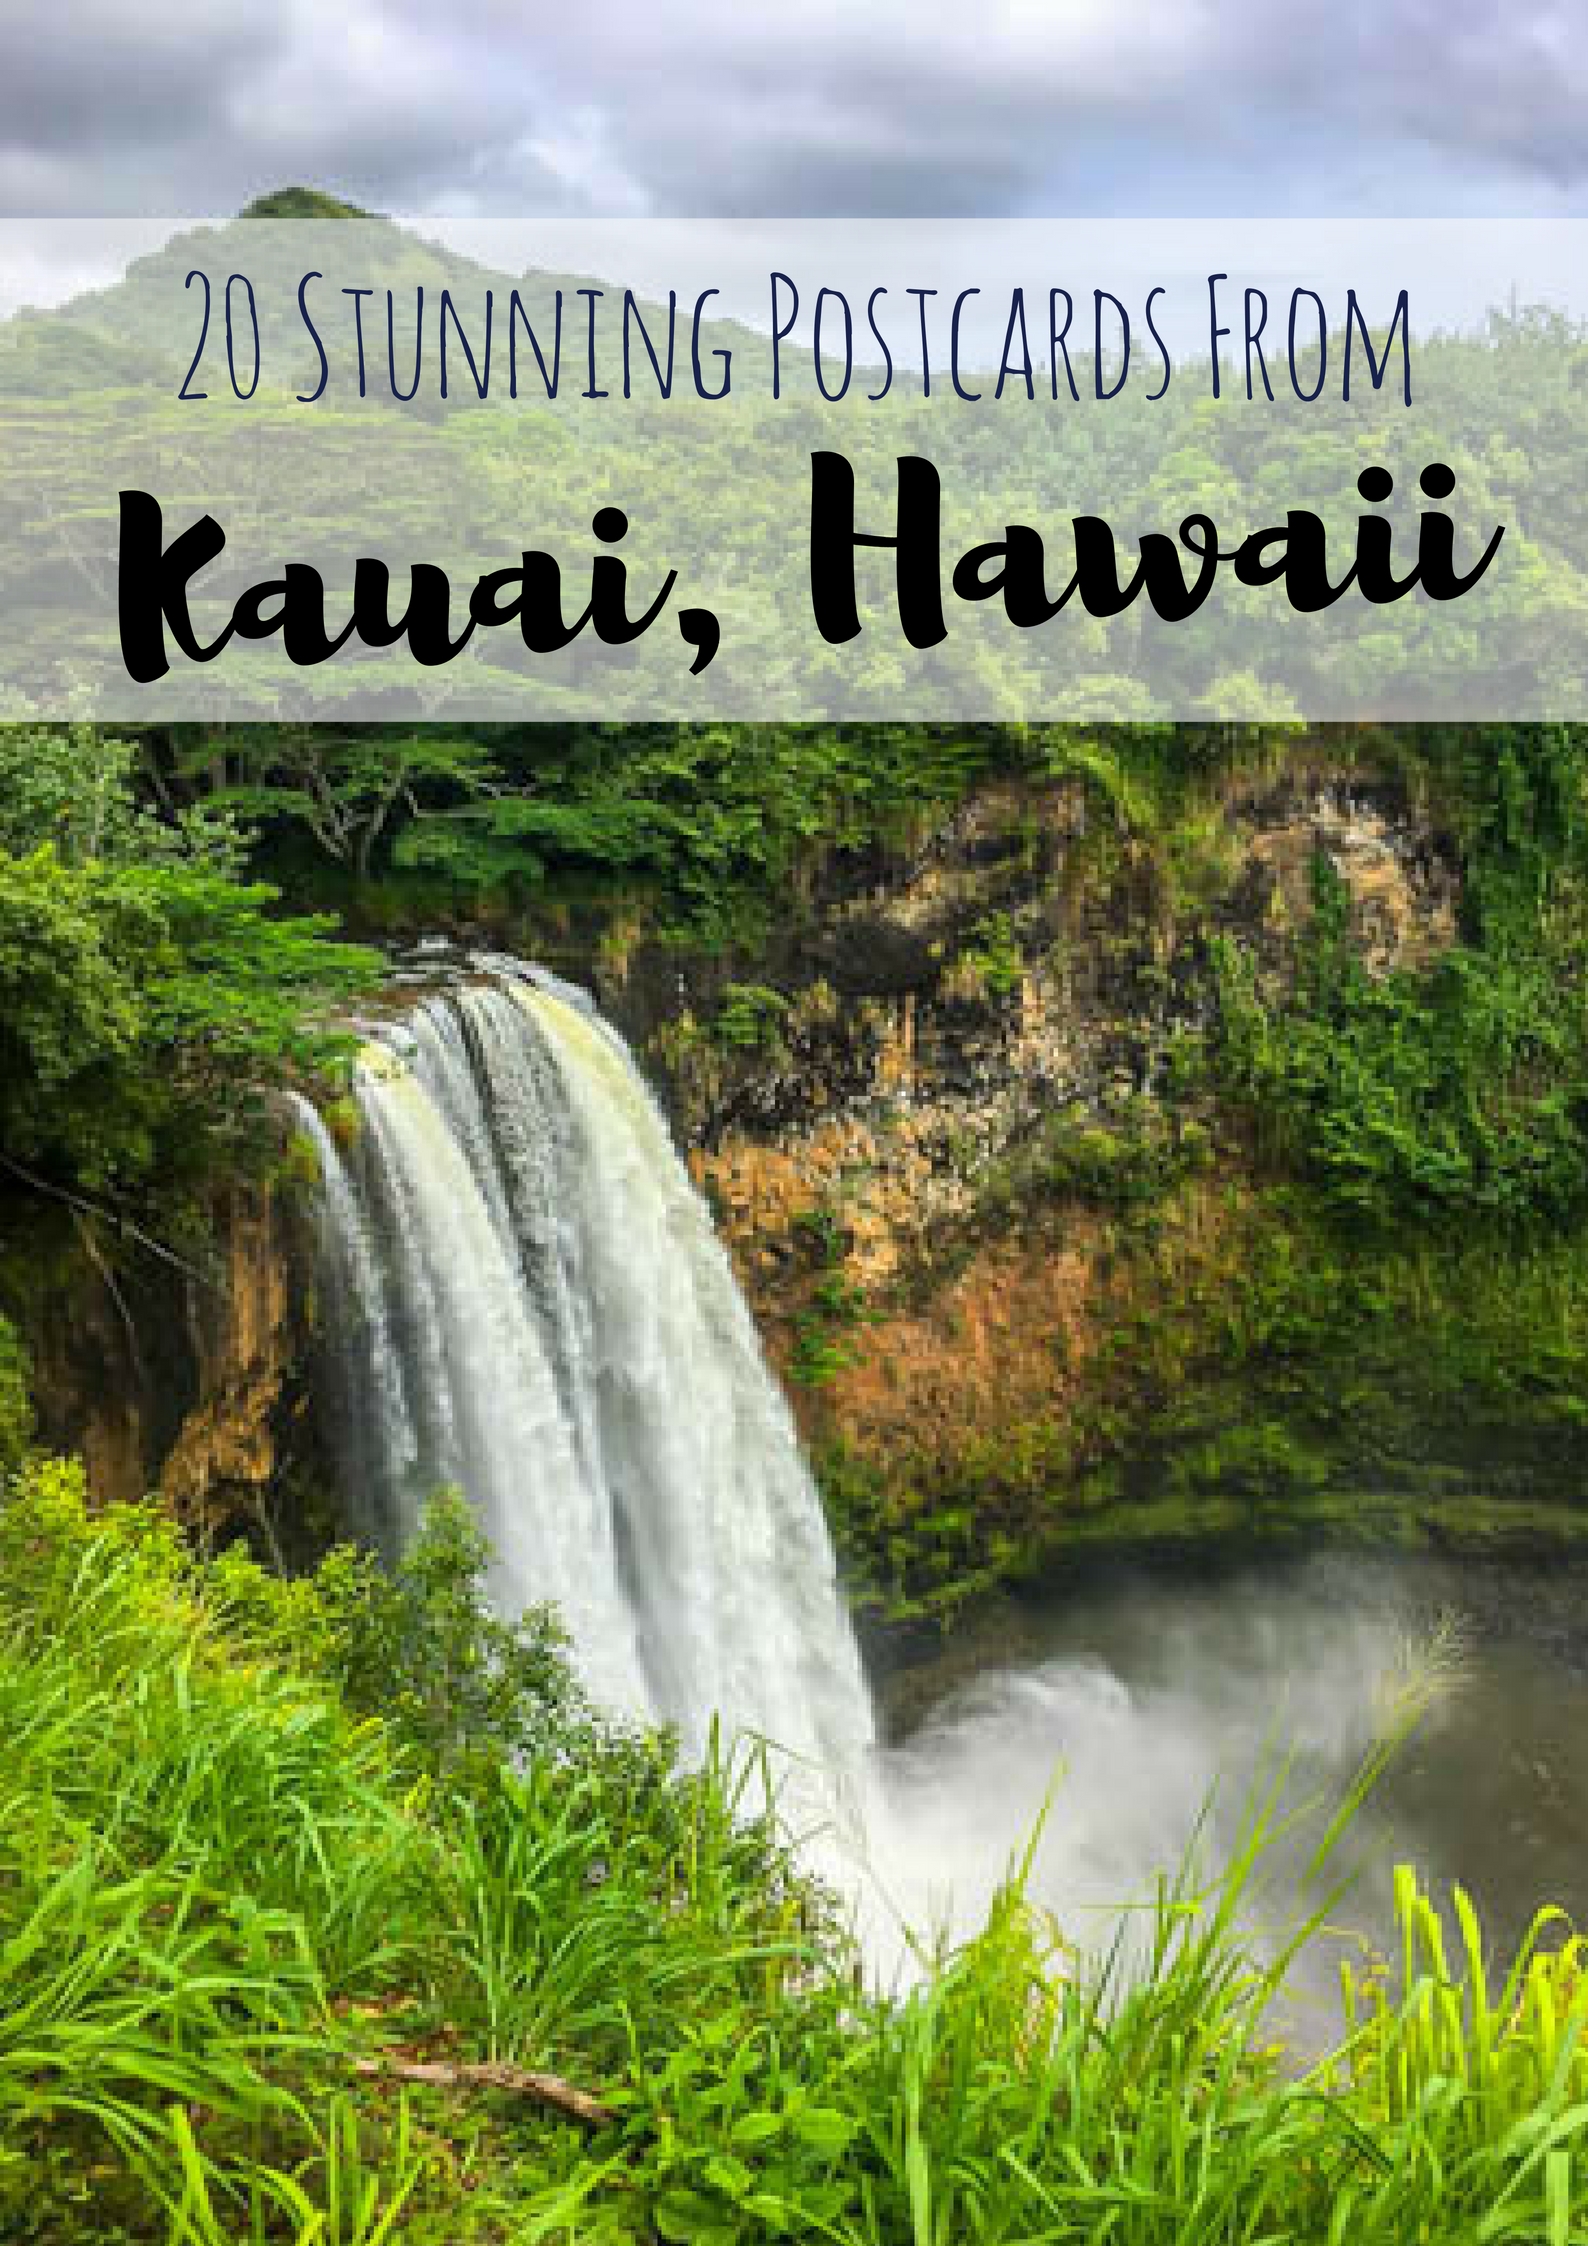 20 postcards from Kauai Hawaii